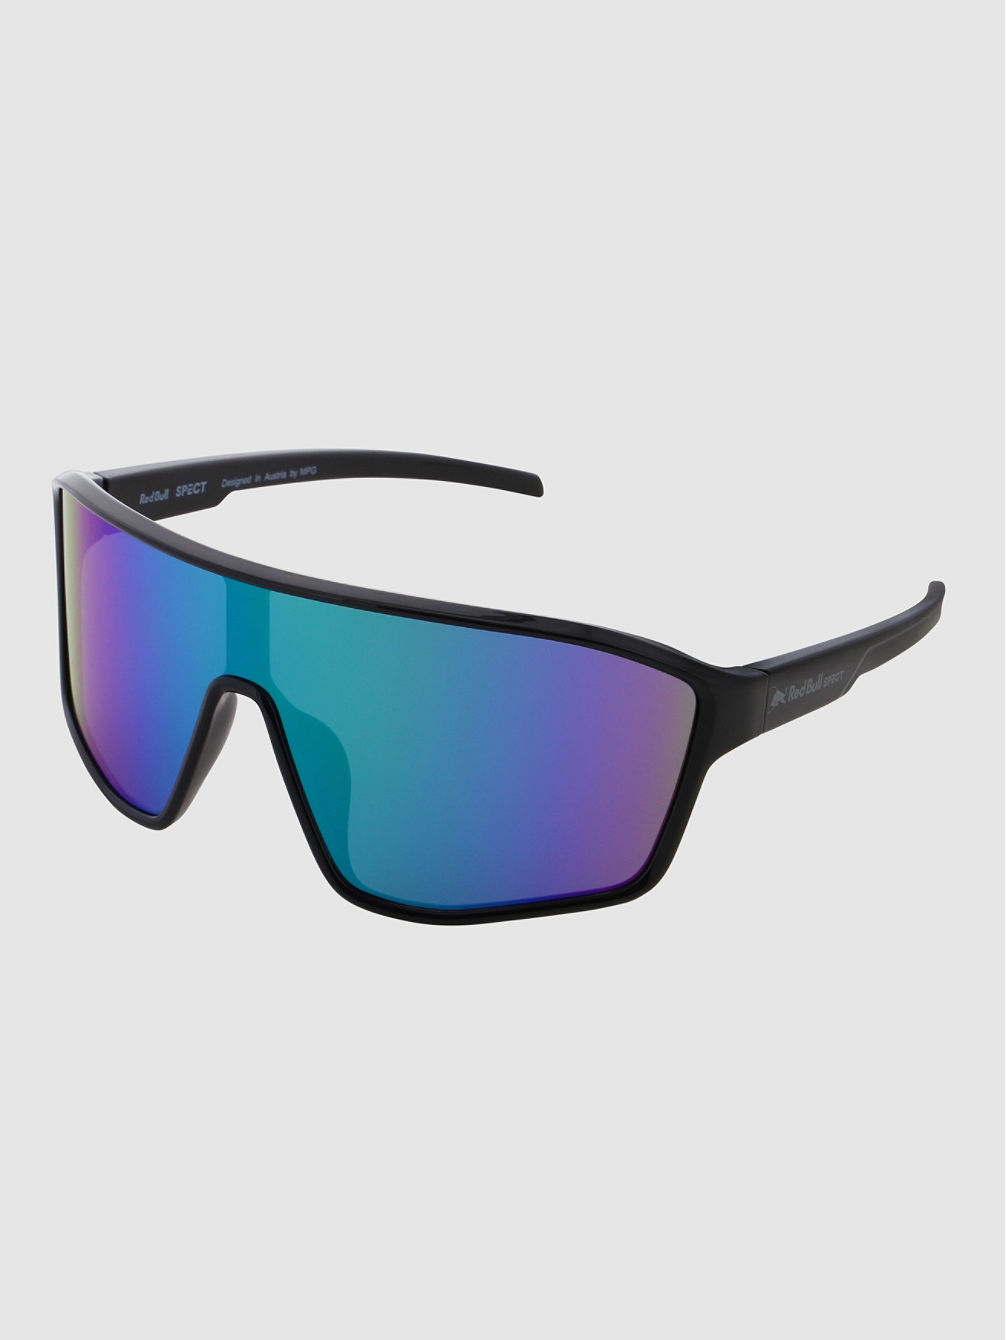 DAFT-005 Black Sunglasses